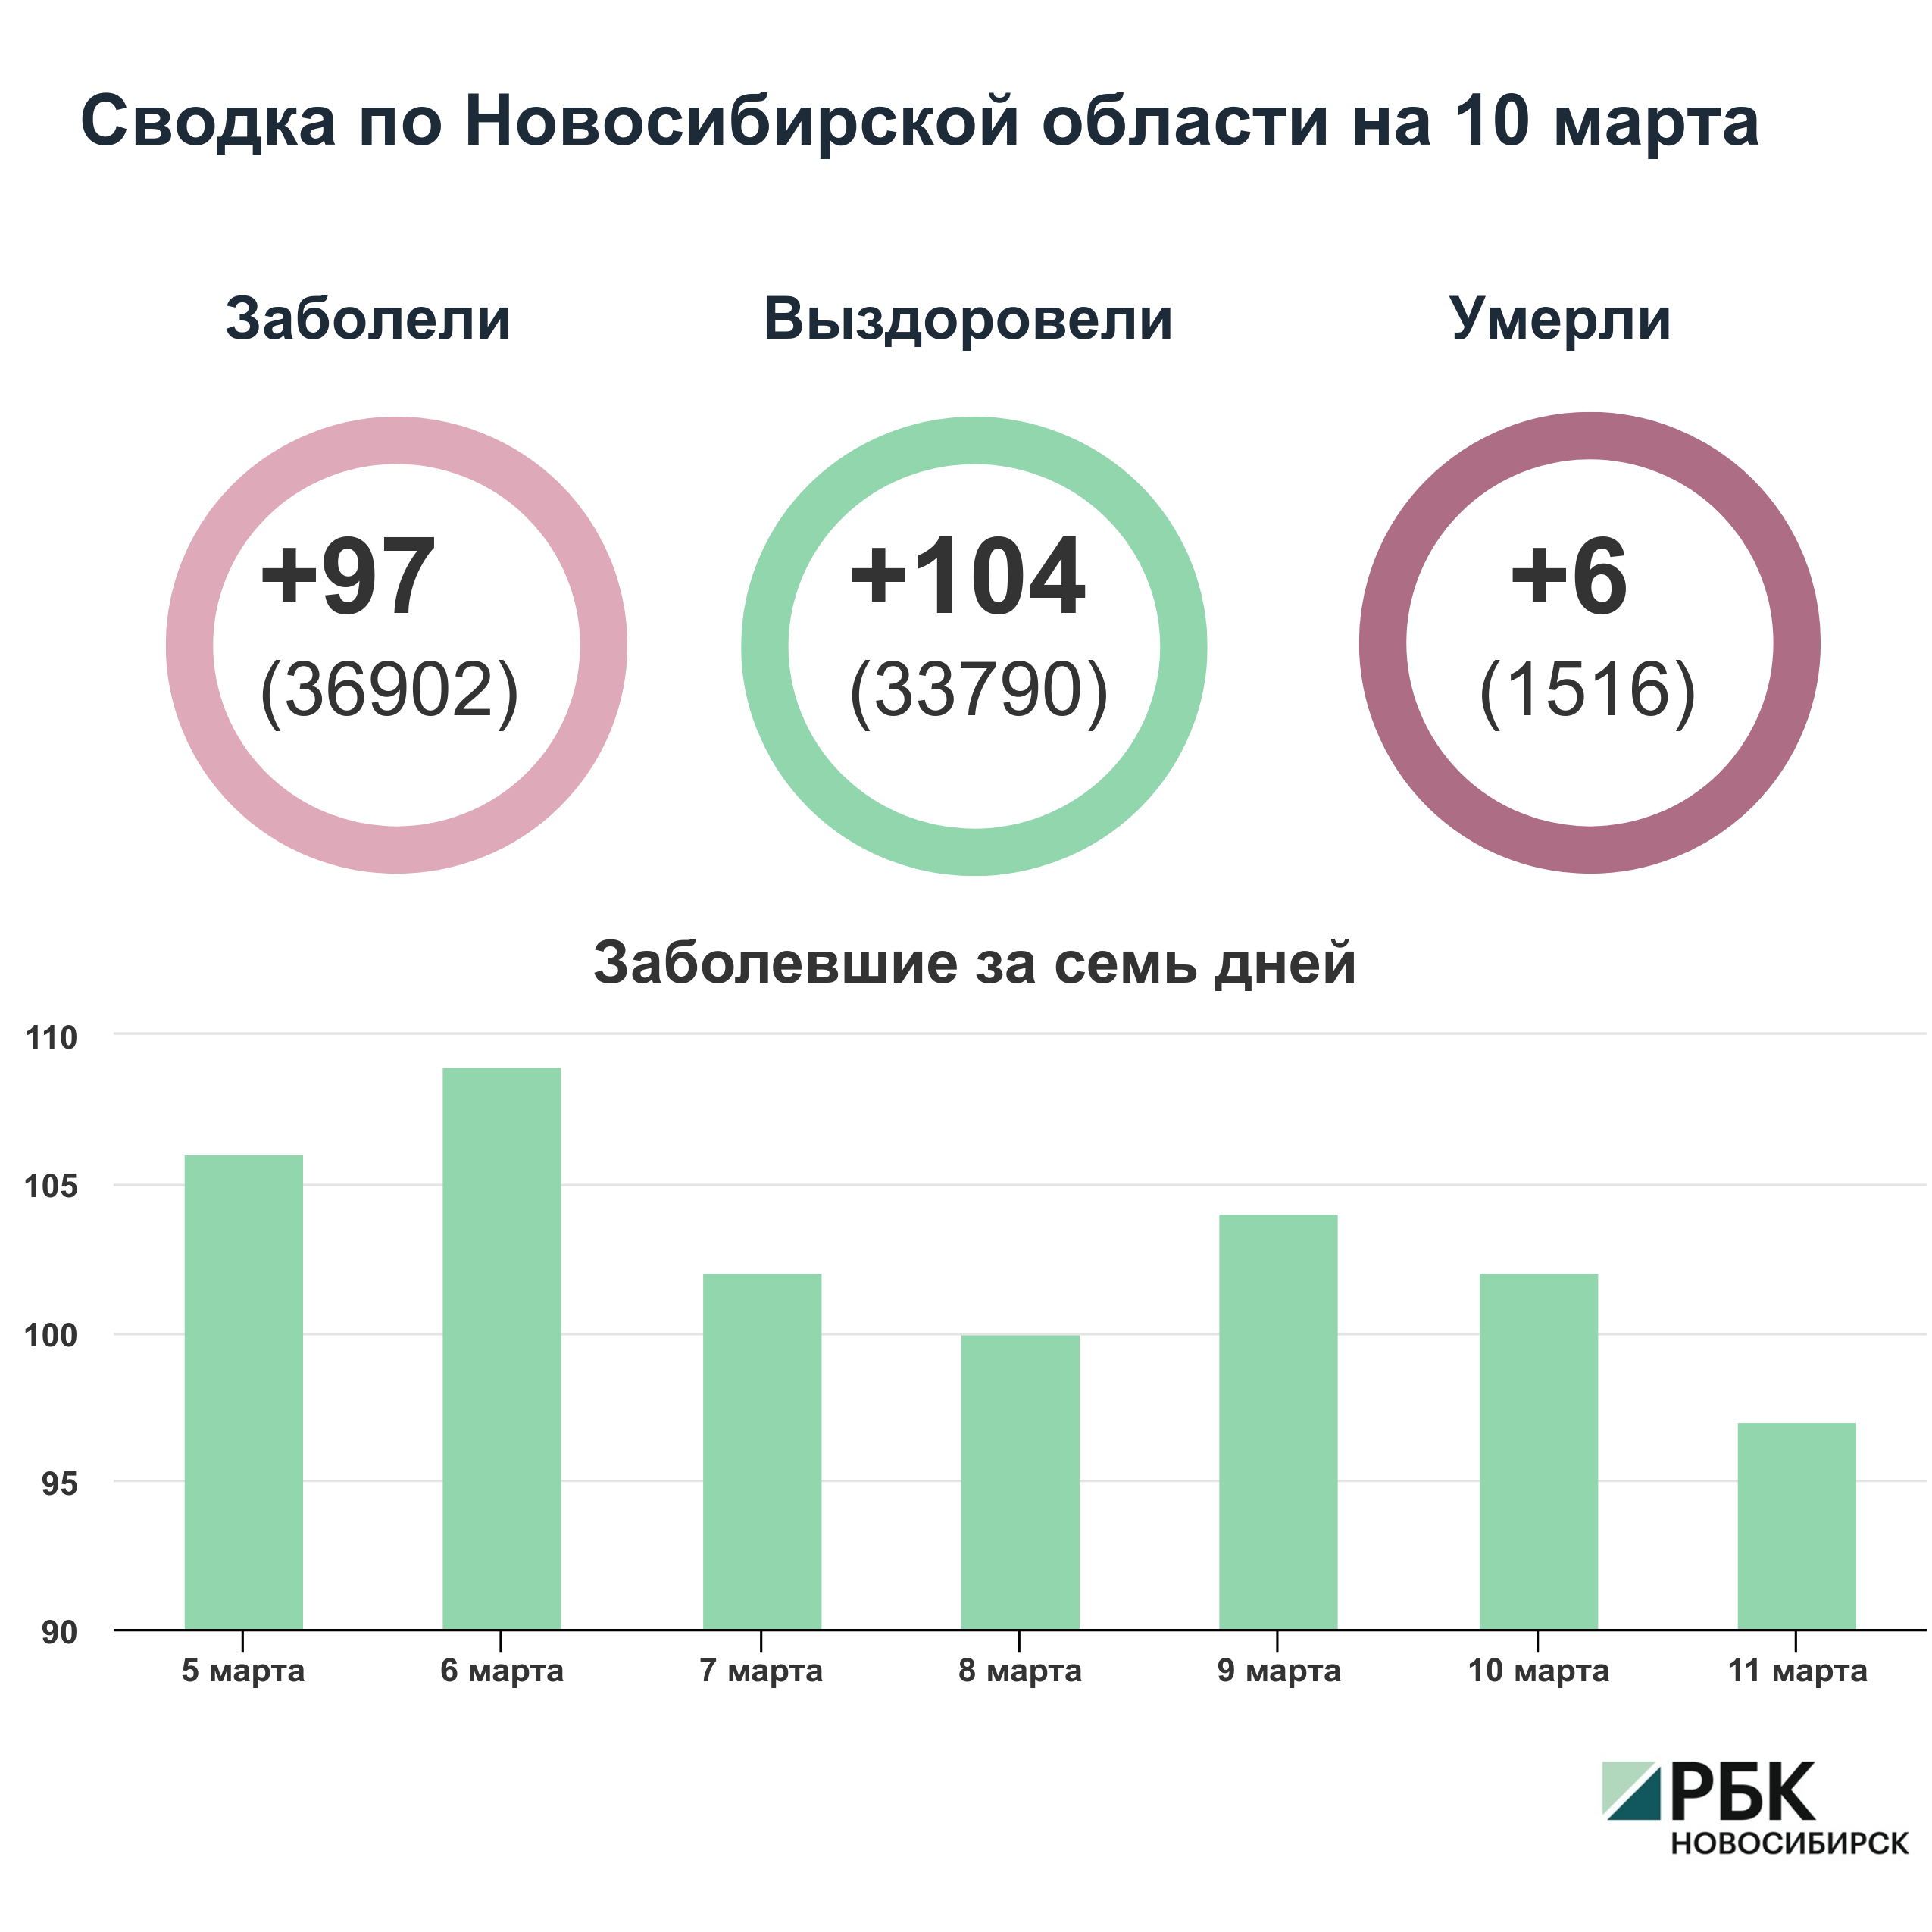 Коронавирус в Новосибирске: сводка на 11 марта